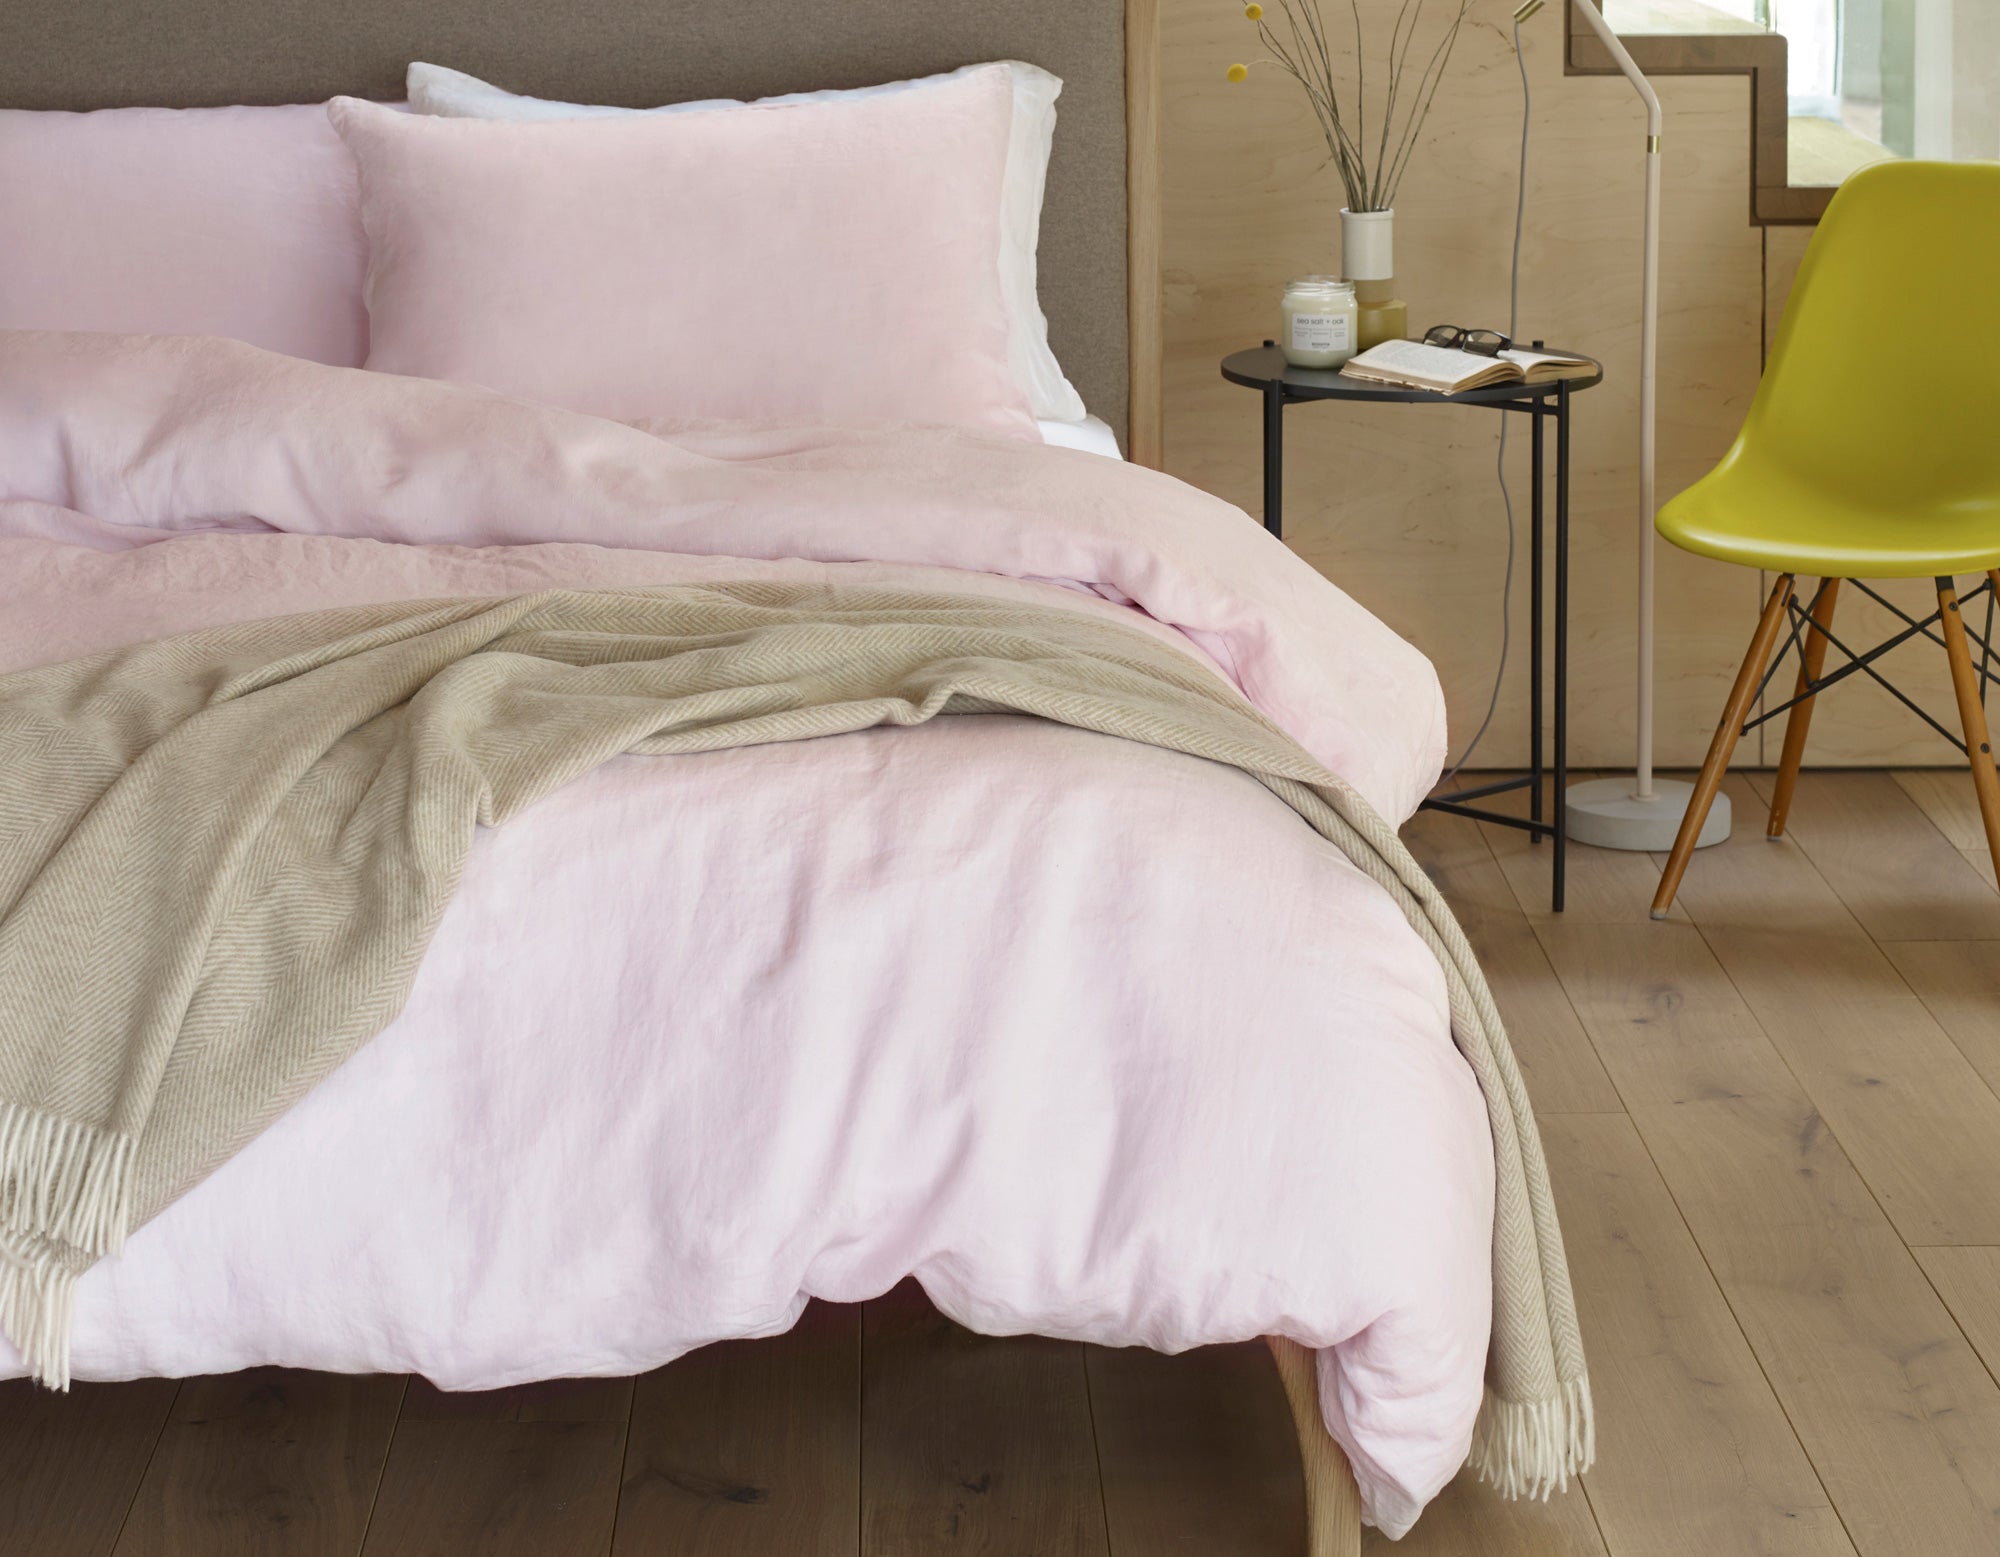 Super Soft Linen Sheets in Soft Pink on Bed | scooms